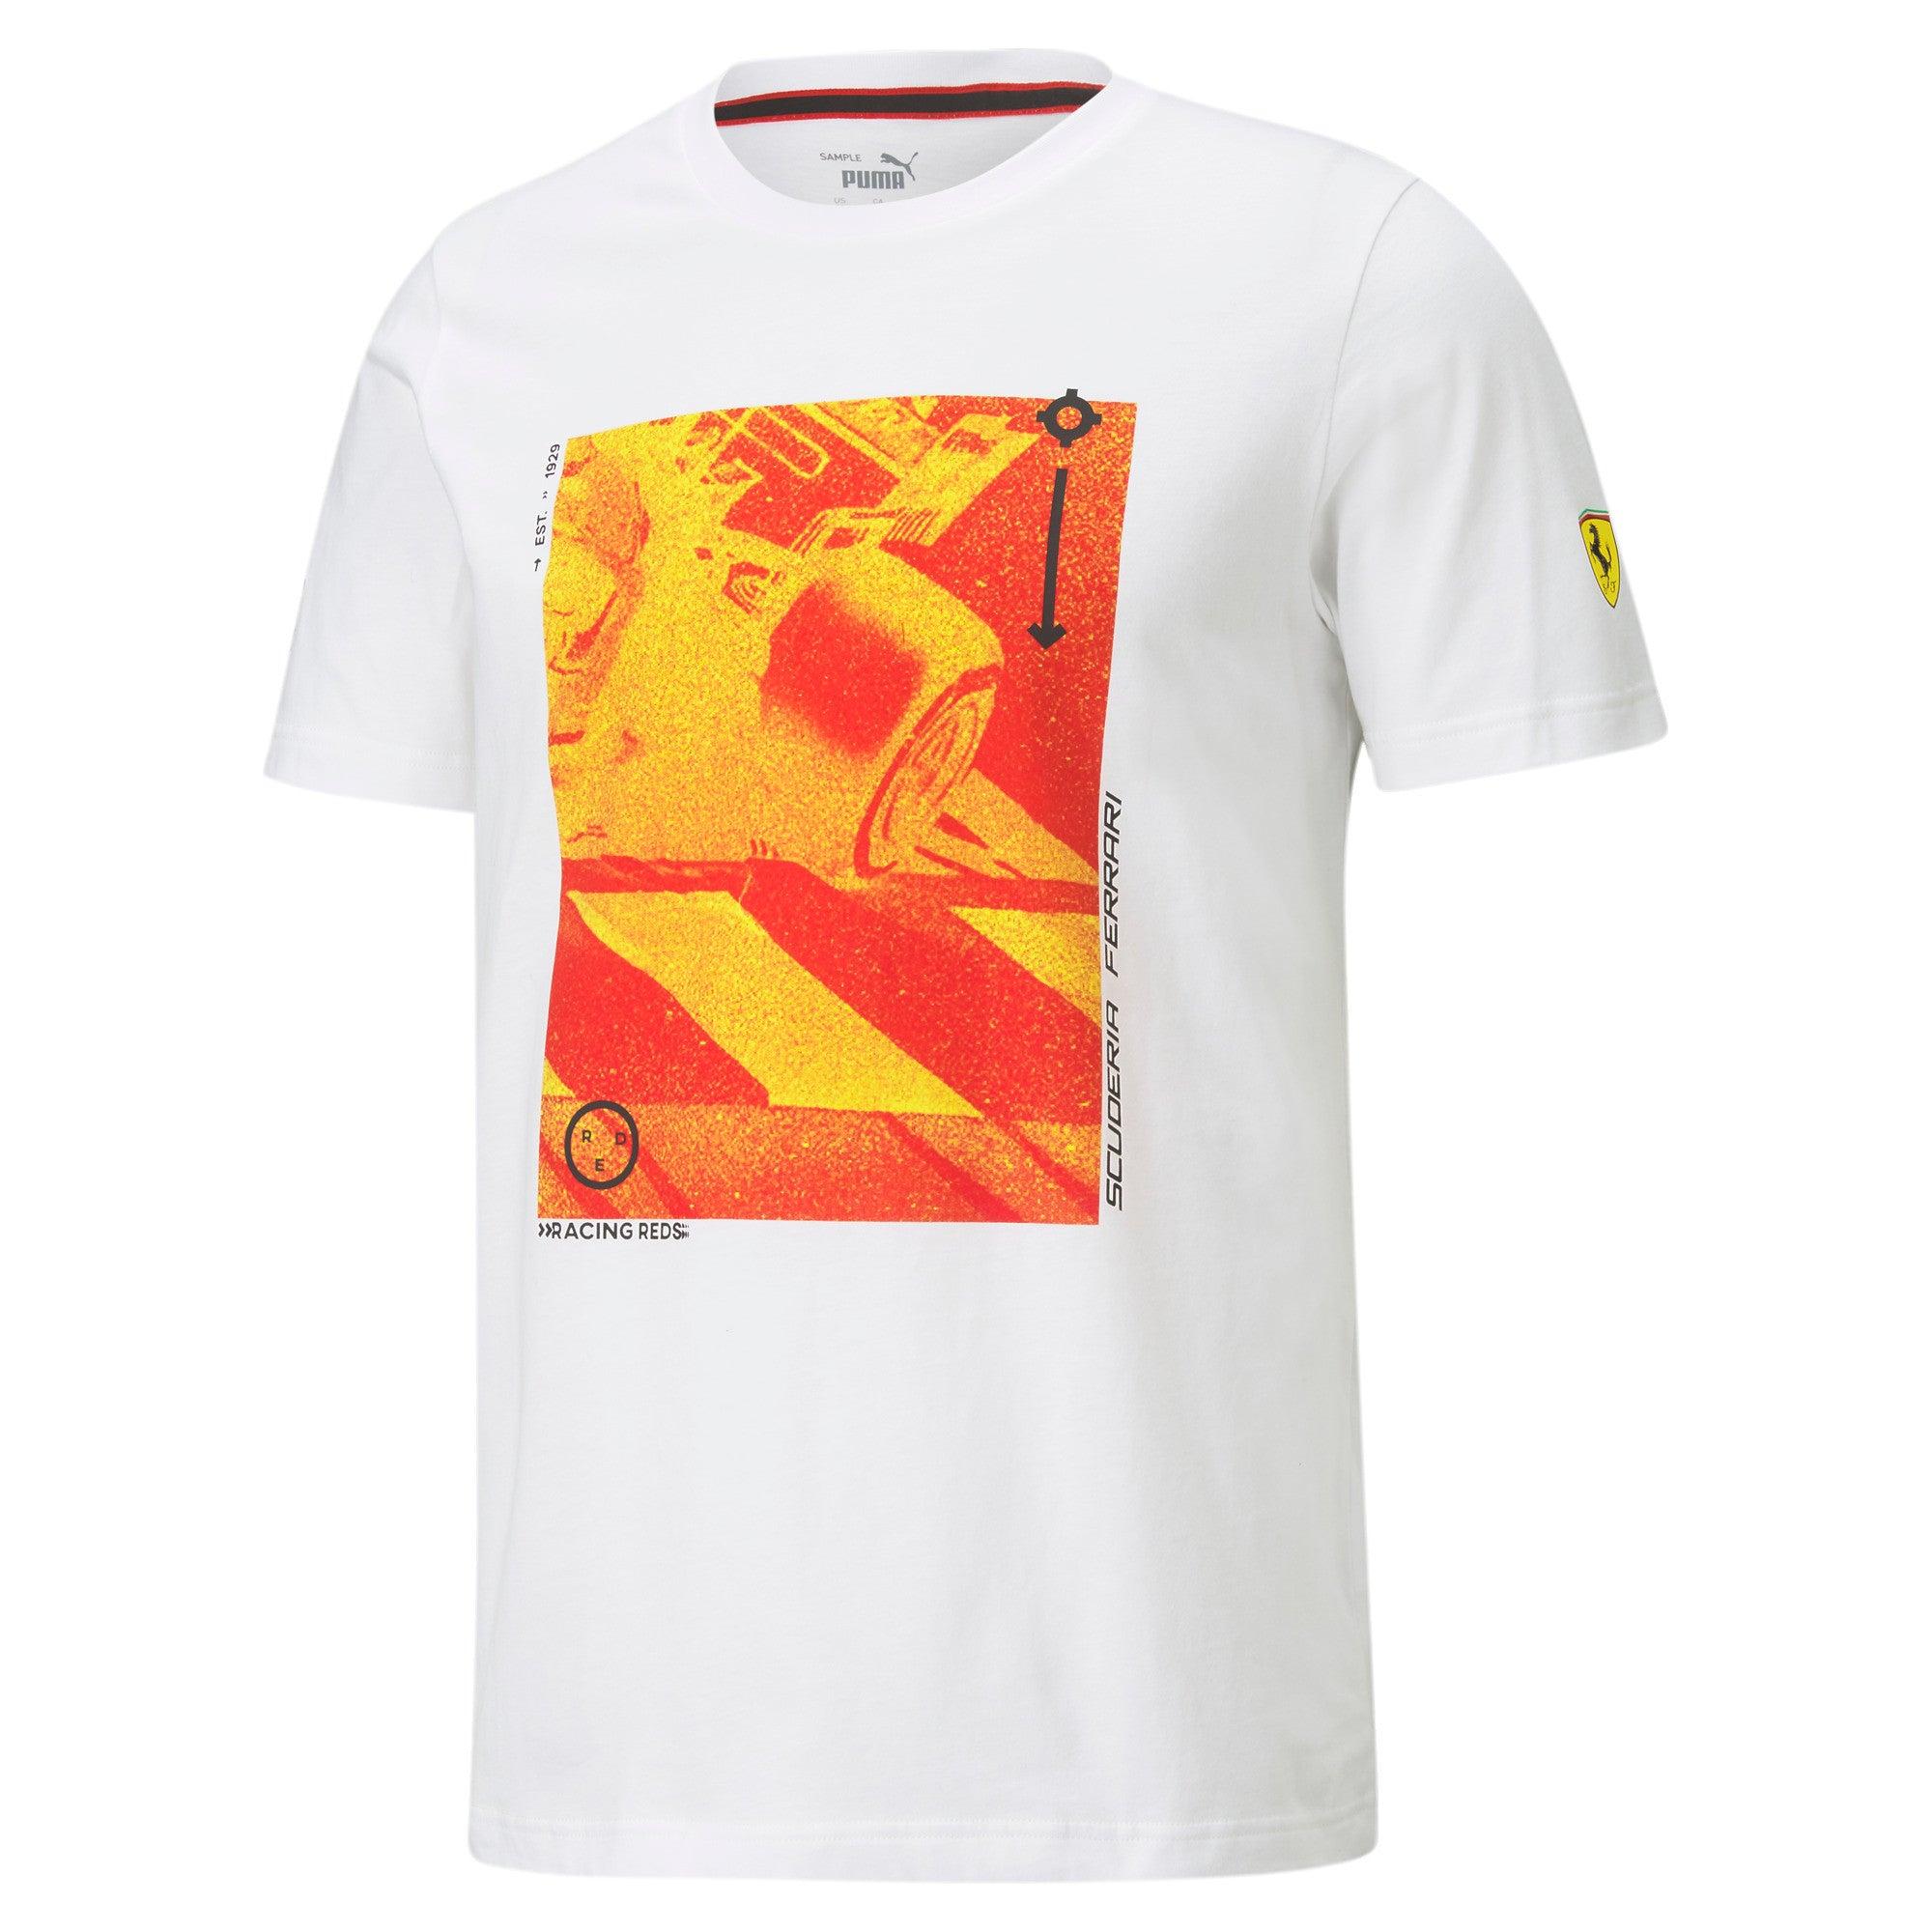 Puma Men's Ferrari Racing Graphic T-Shirt - Tan - M Each